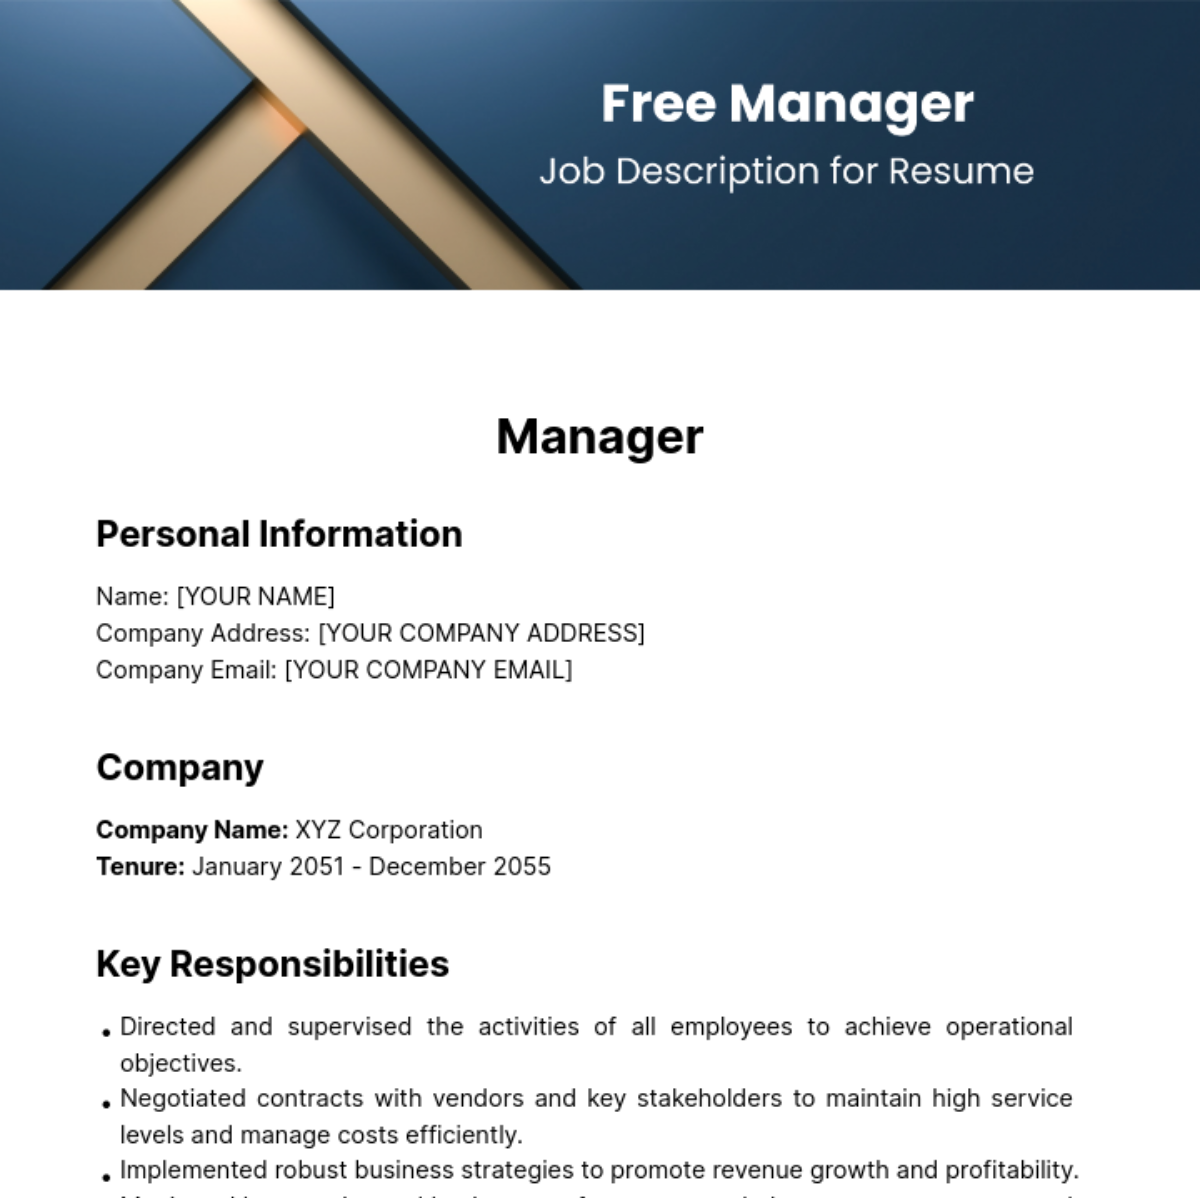 Free Manager Job Description for Resume Template